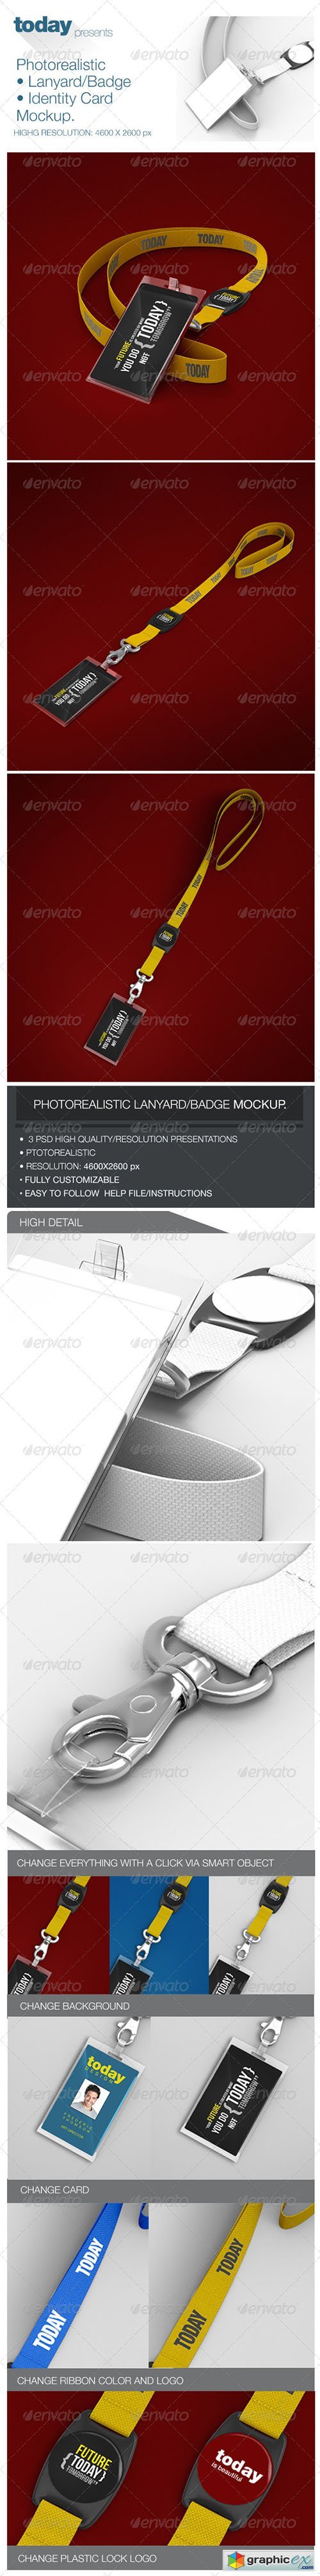 Download Photorealistic Lanyard Badge Mockup Free Download Vector Stock Image Photoshop Icon PSD Mockup Templates